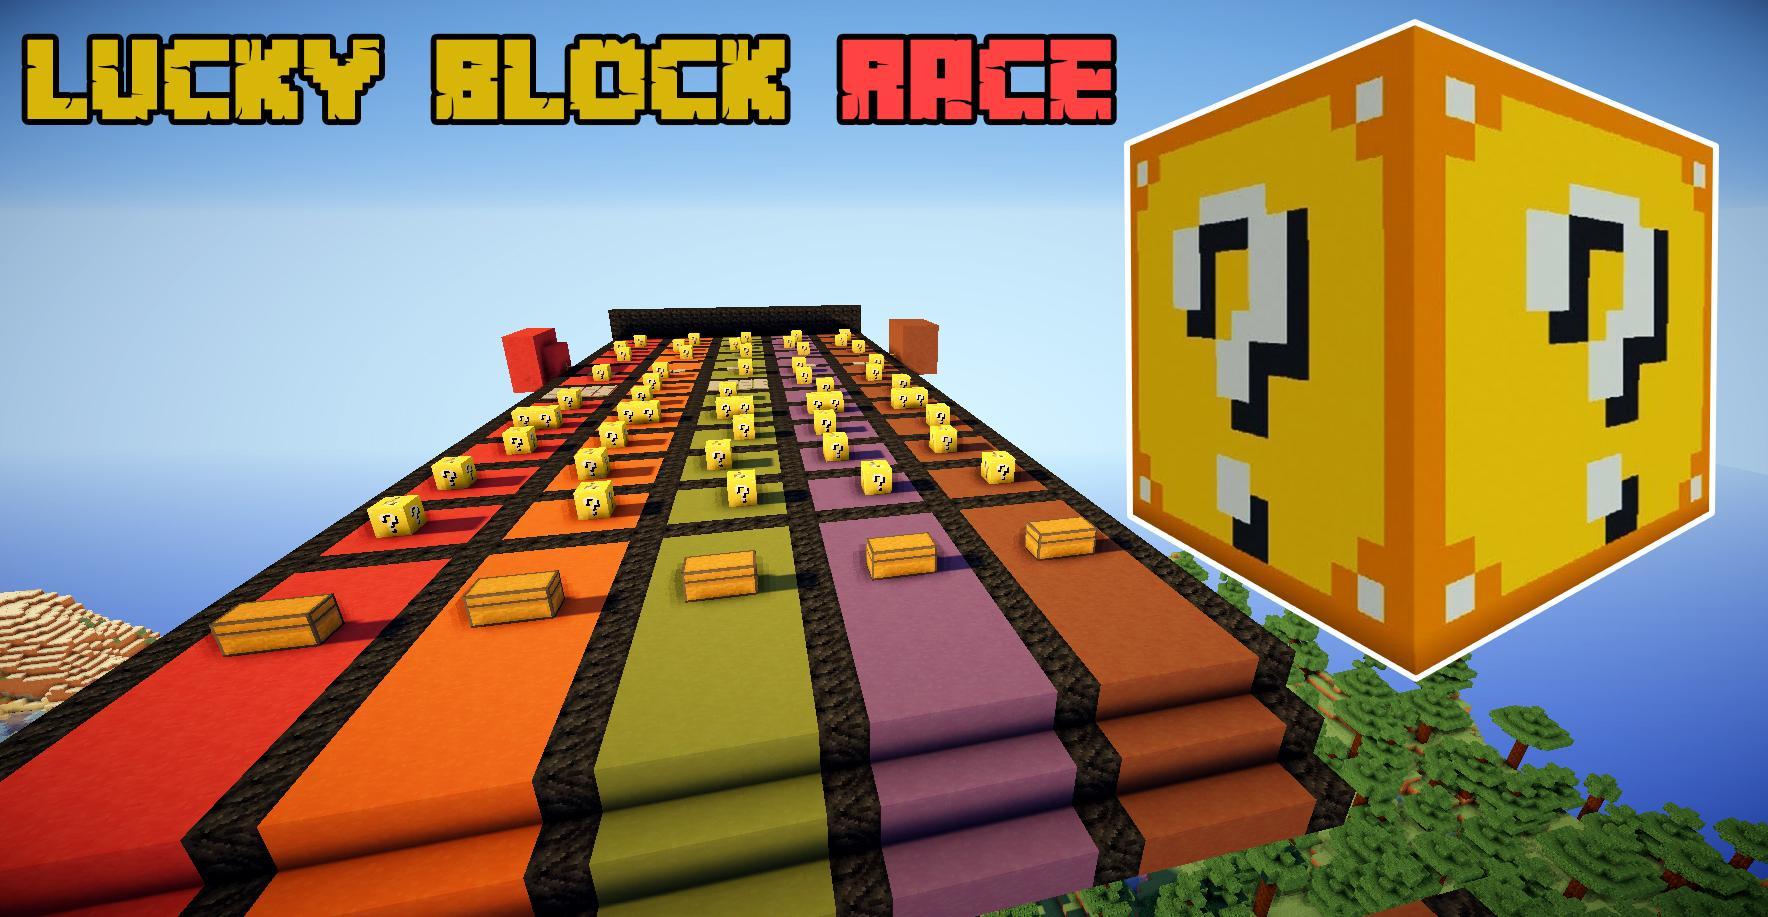 Lucky карты майнкрафт. Лаки блок. Lucky Block Race. Lucky Block Race Map. Лаки блок по английскому.